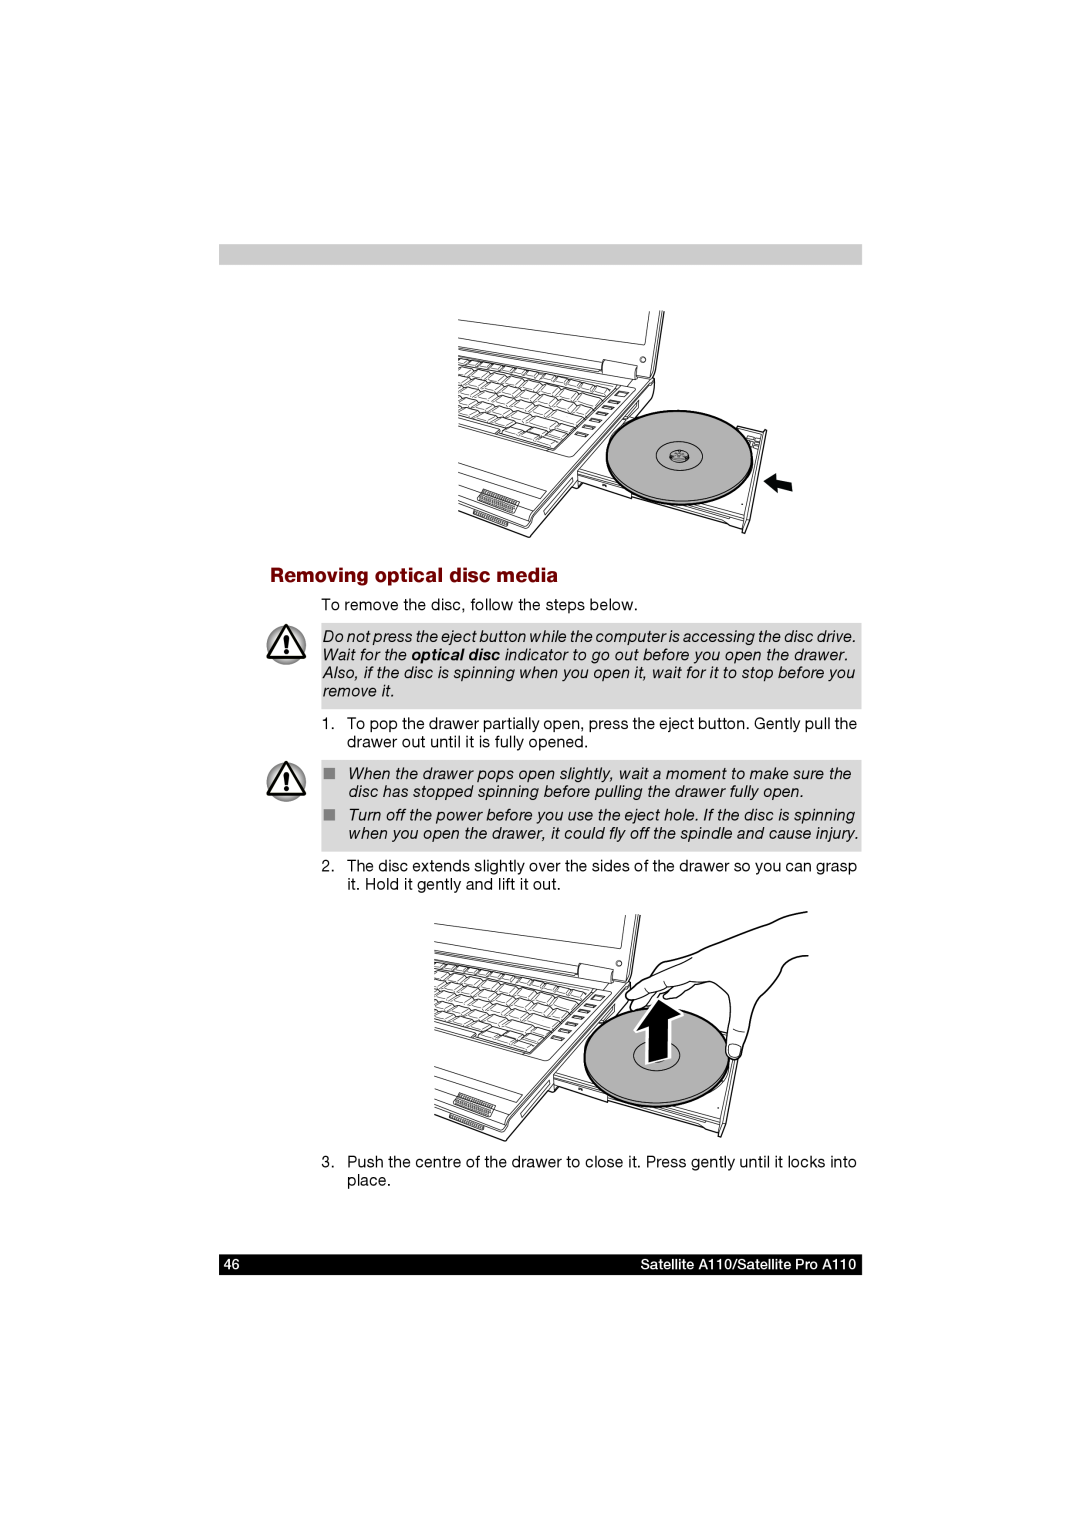 Toshiba A110 user manual Removing optical disc media 